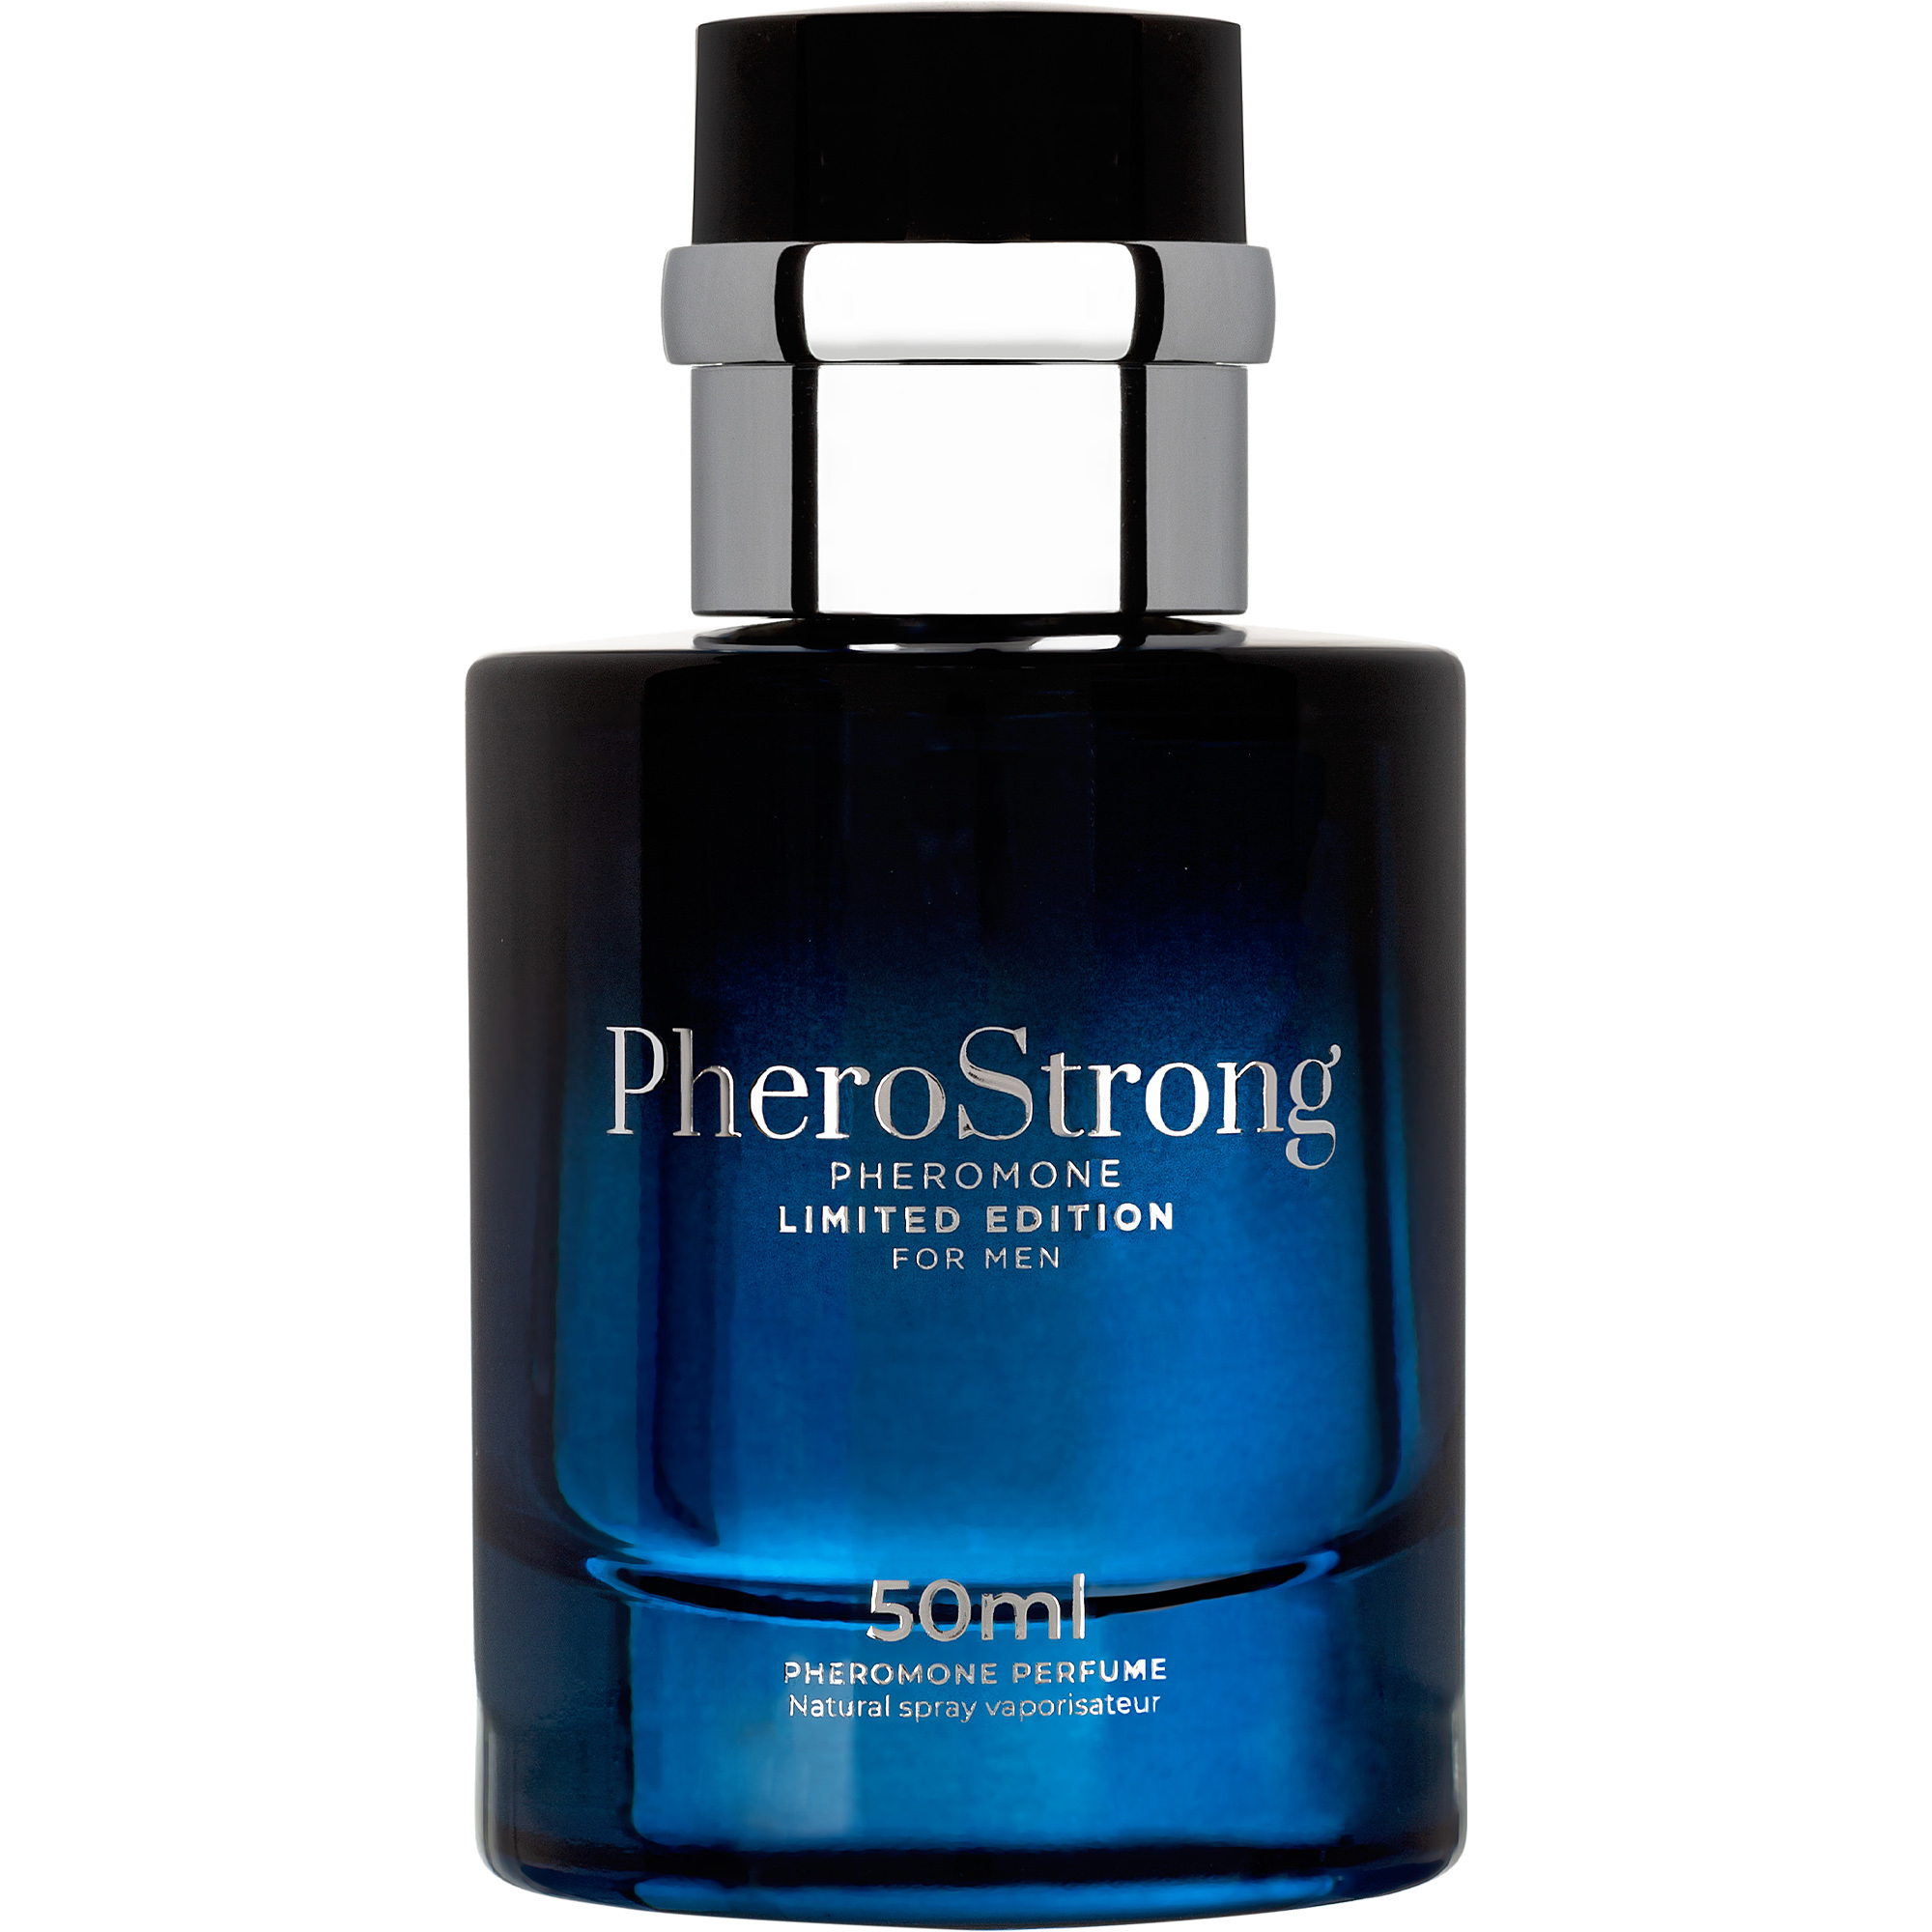 PheroStrong Pheromone Parfum Limited Edition for Men 50ml